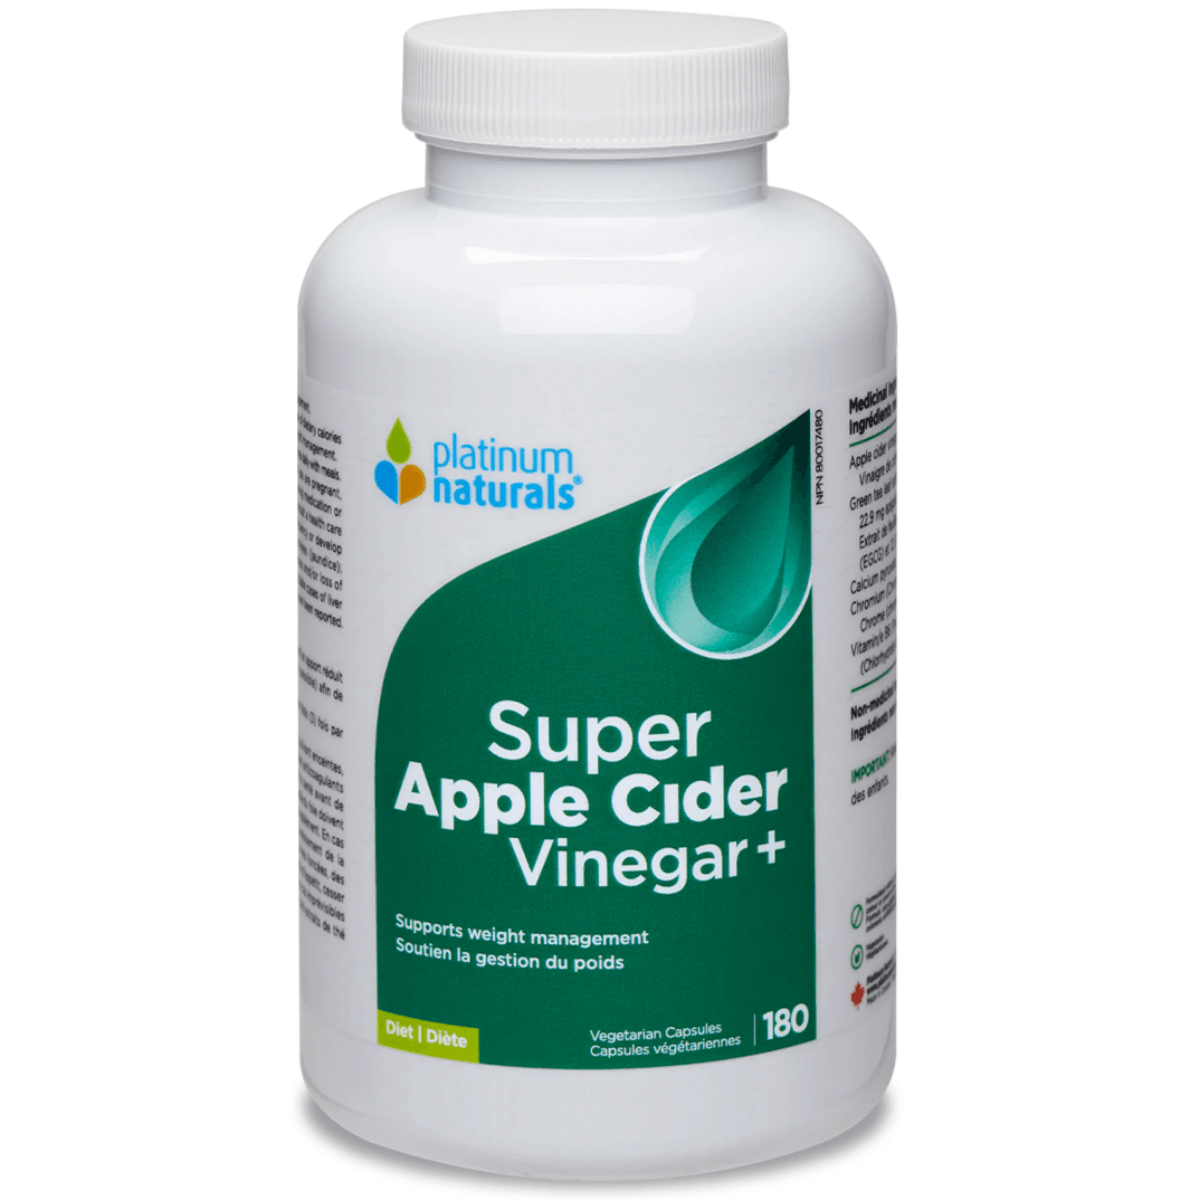 Platinum Naturals Super Apple Cider Vinegar+ 180 Veggie Caps Supplements - Weight Loss at Village Vitamin Store